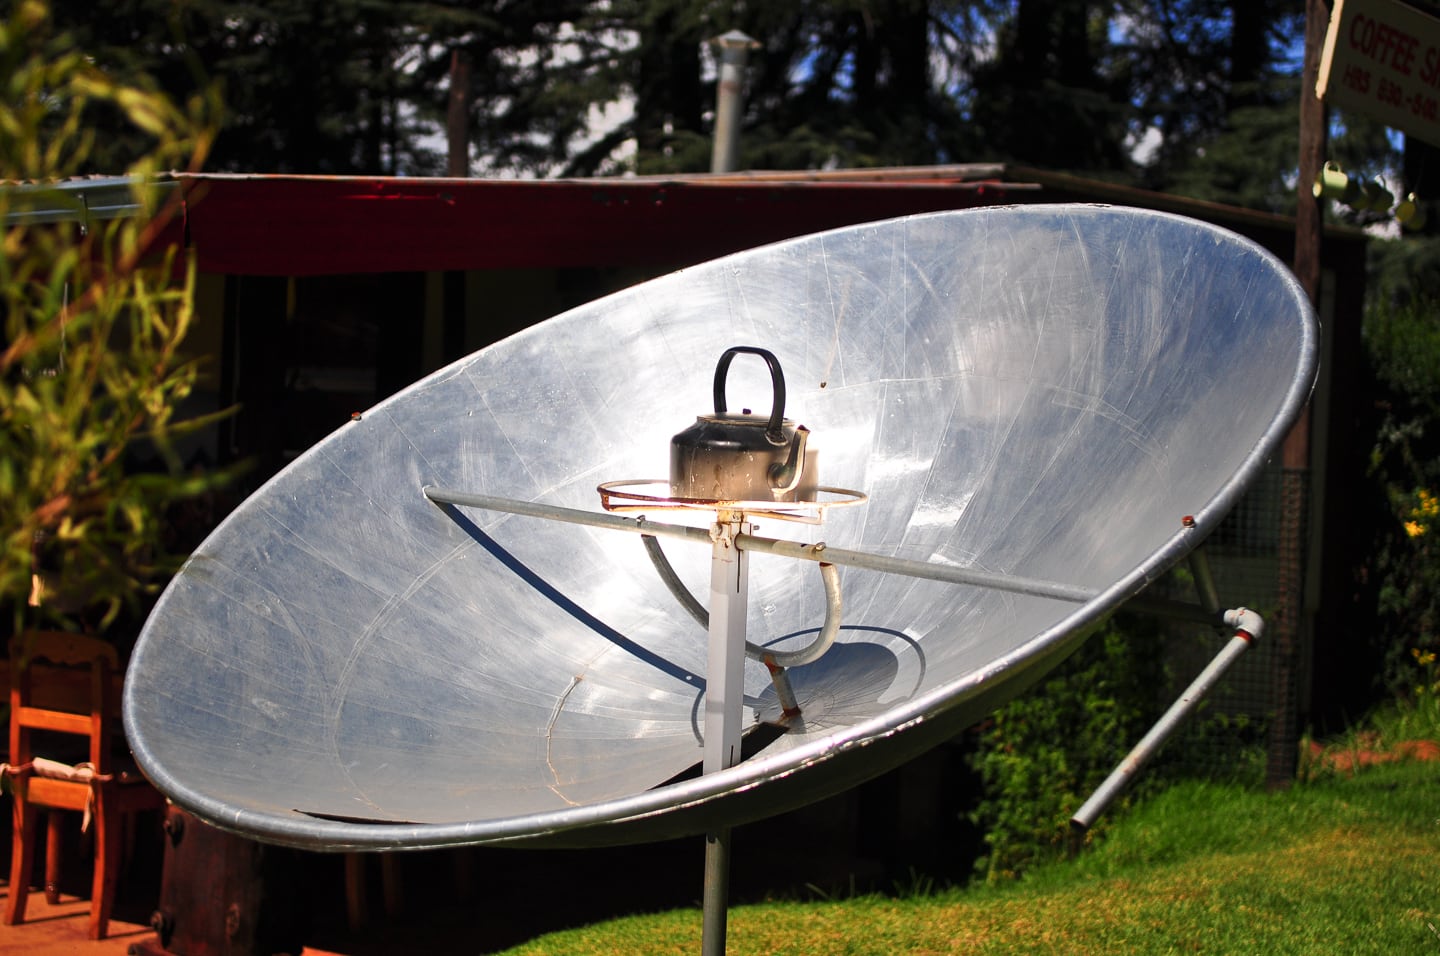 parabolic solar kettle in Africa